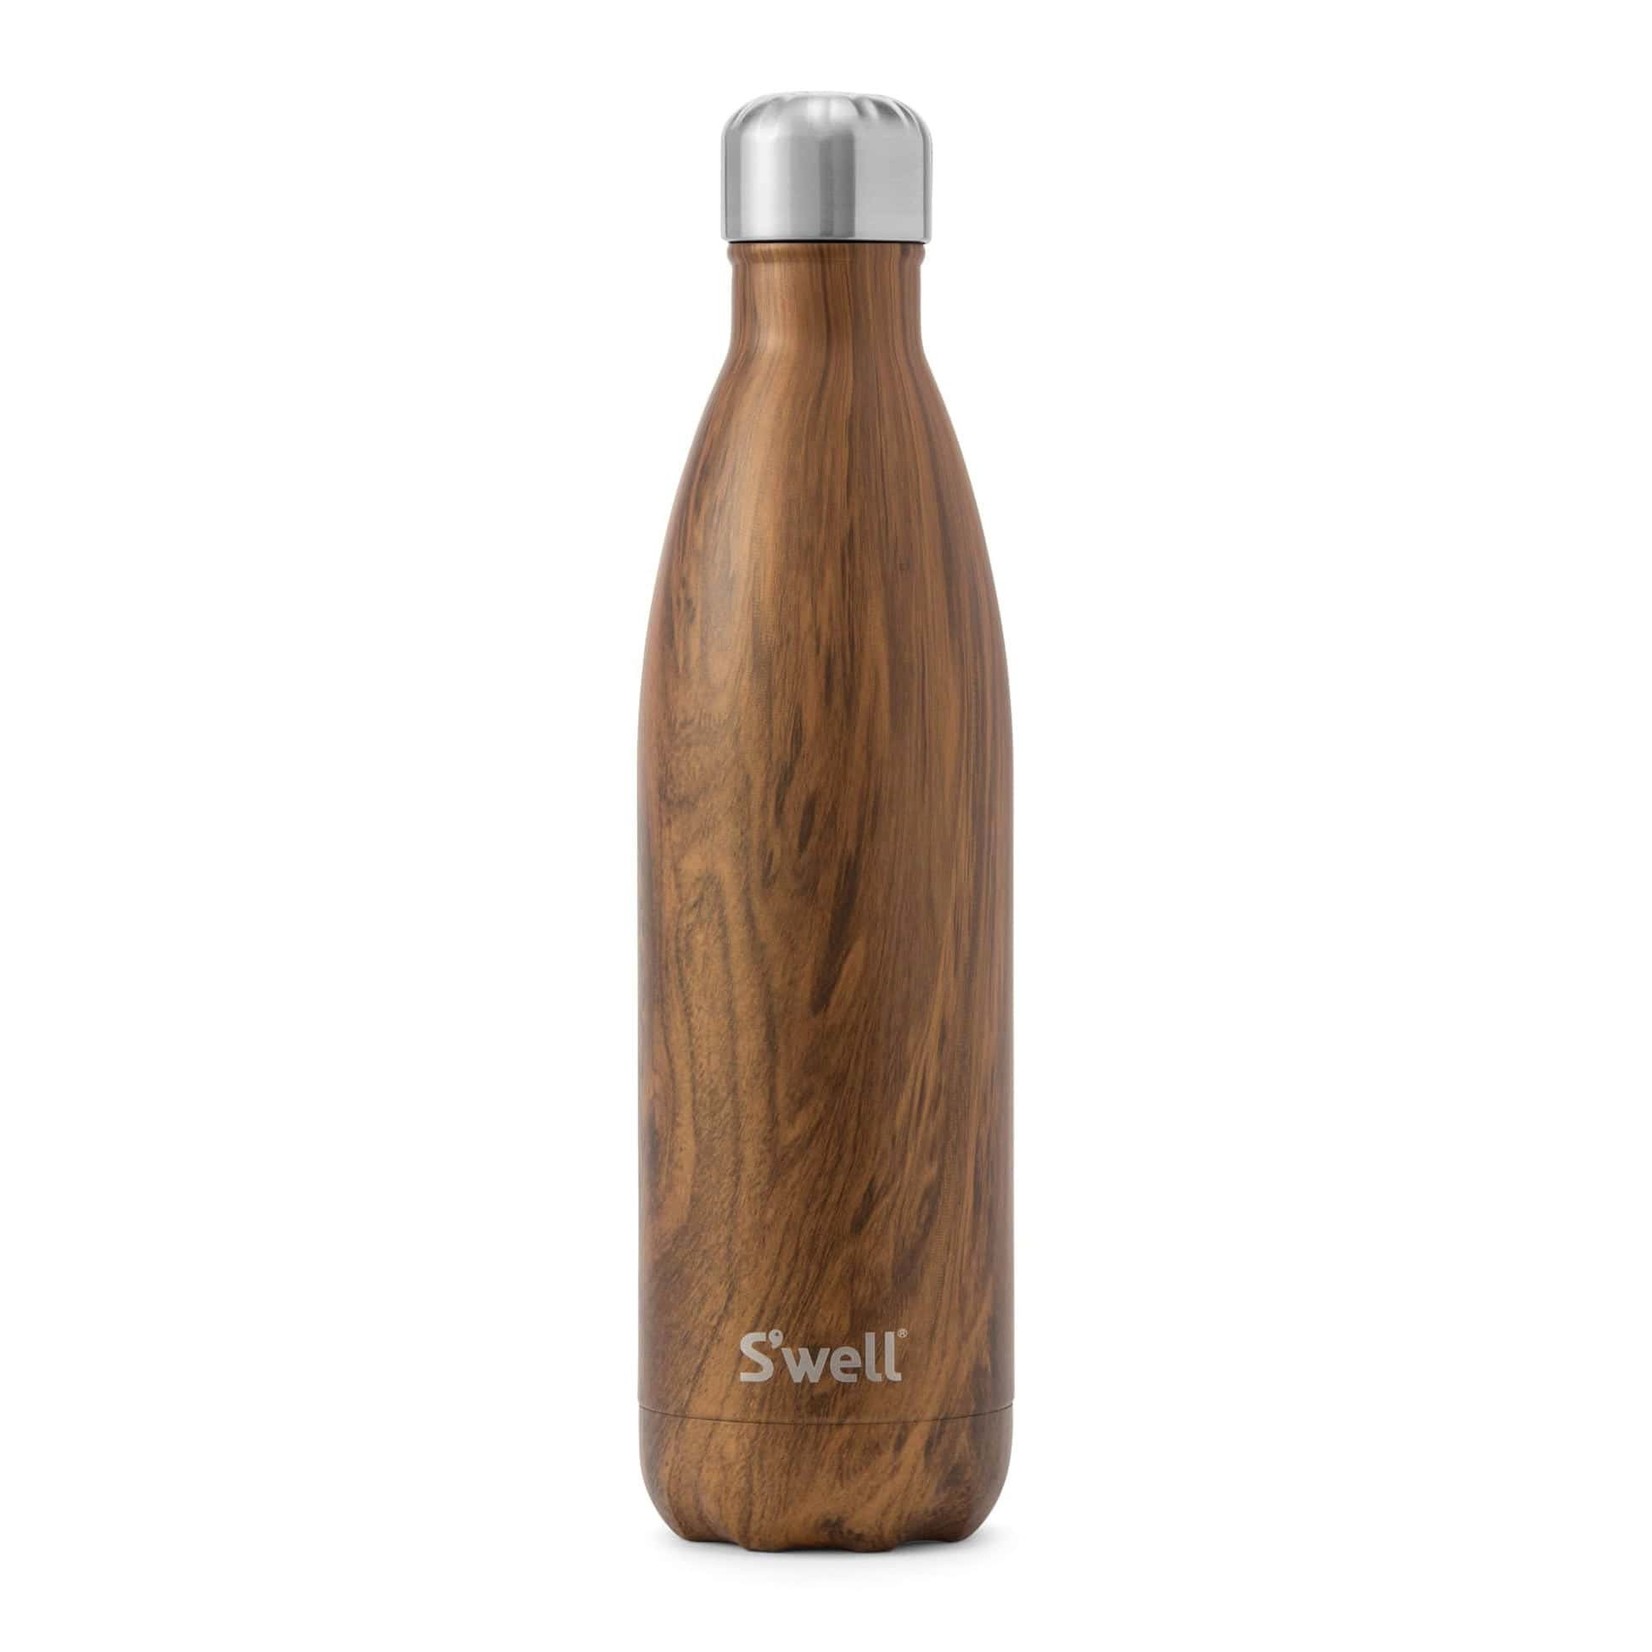 S'well Stainless Steel Water Bottle - Teakwood